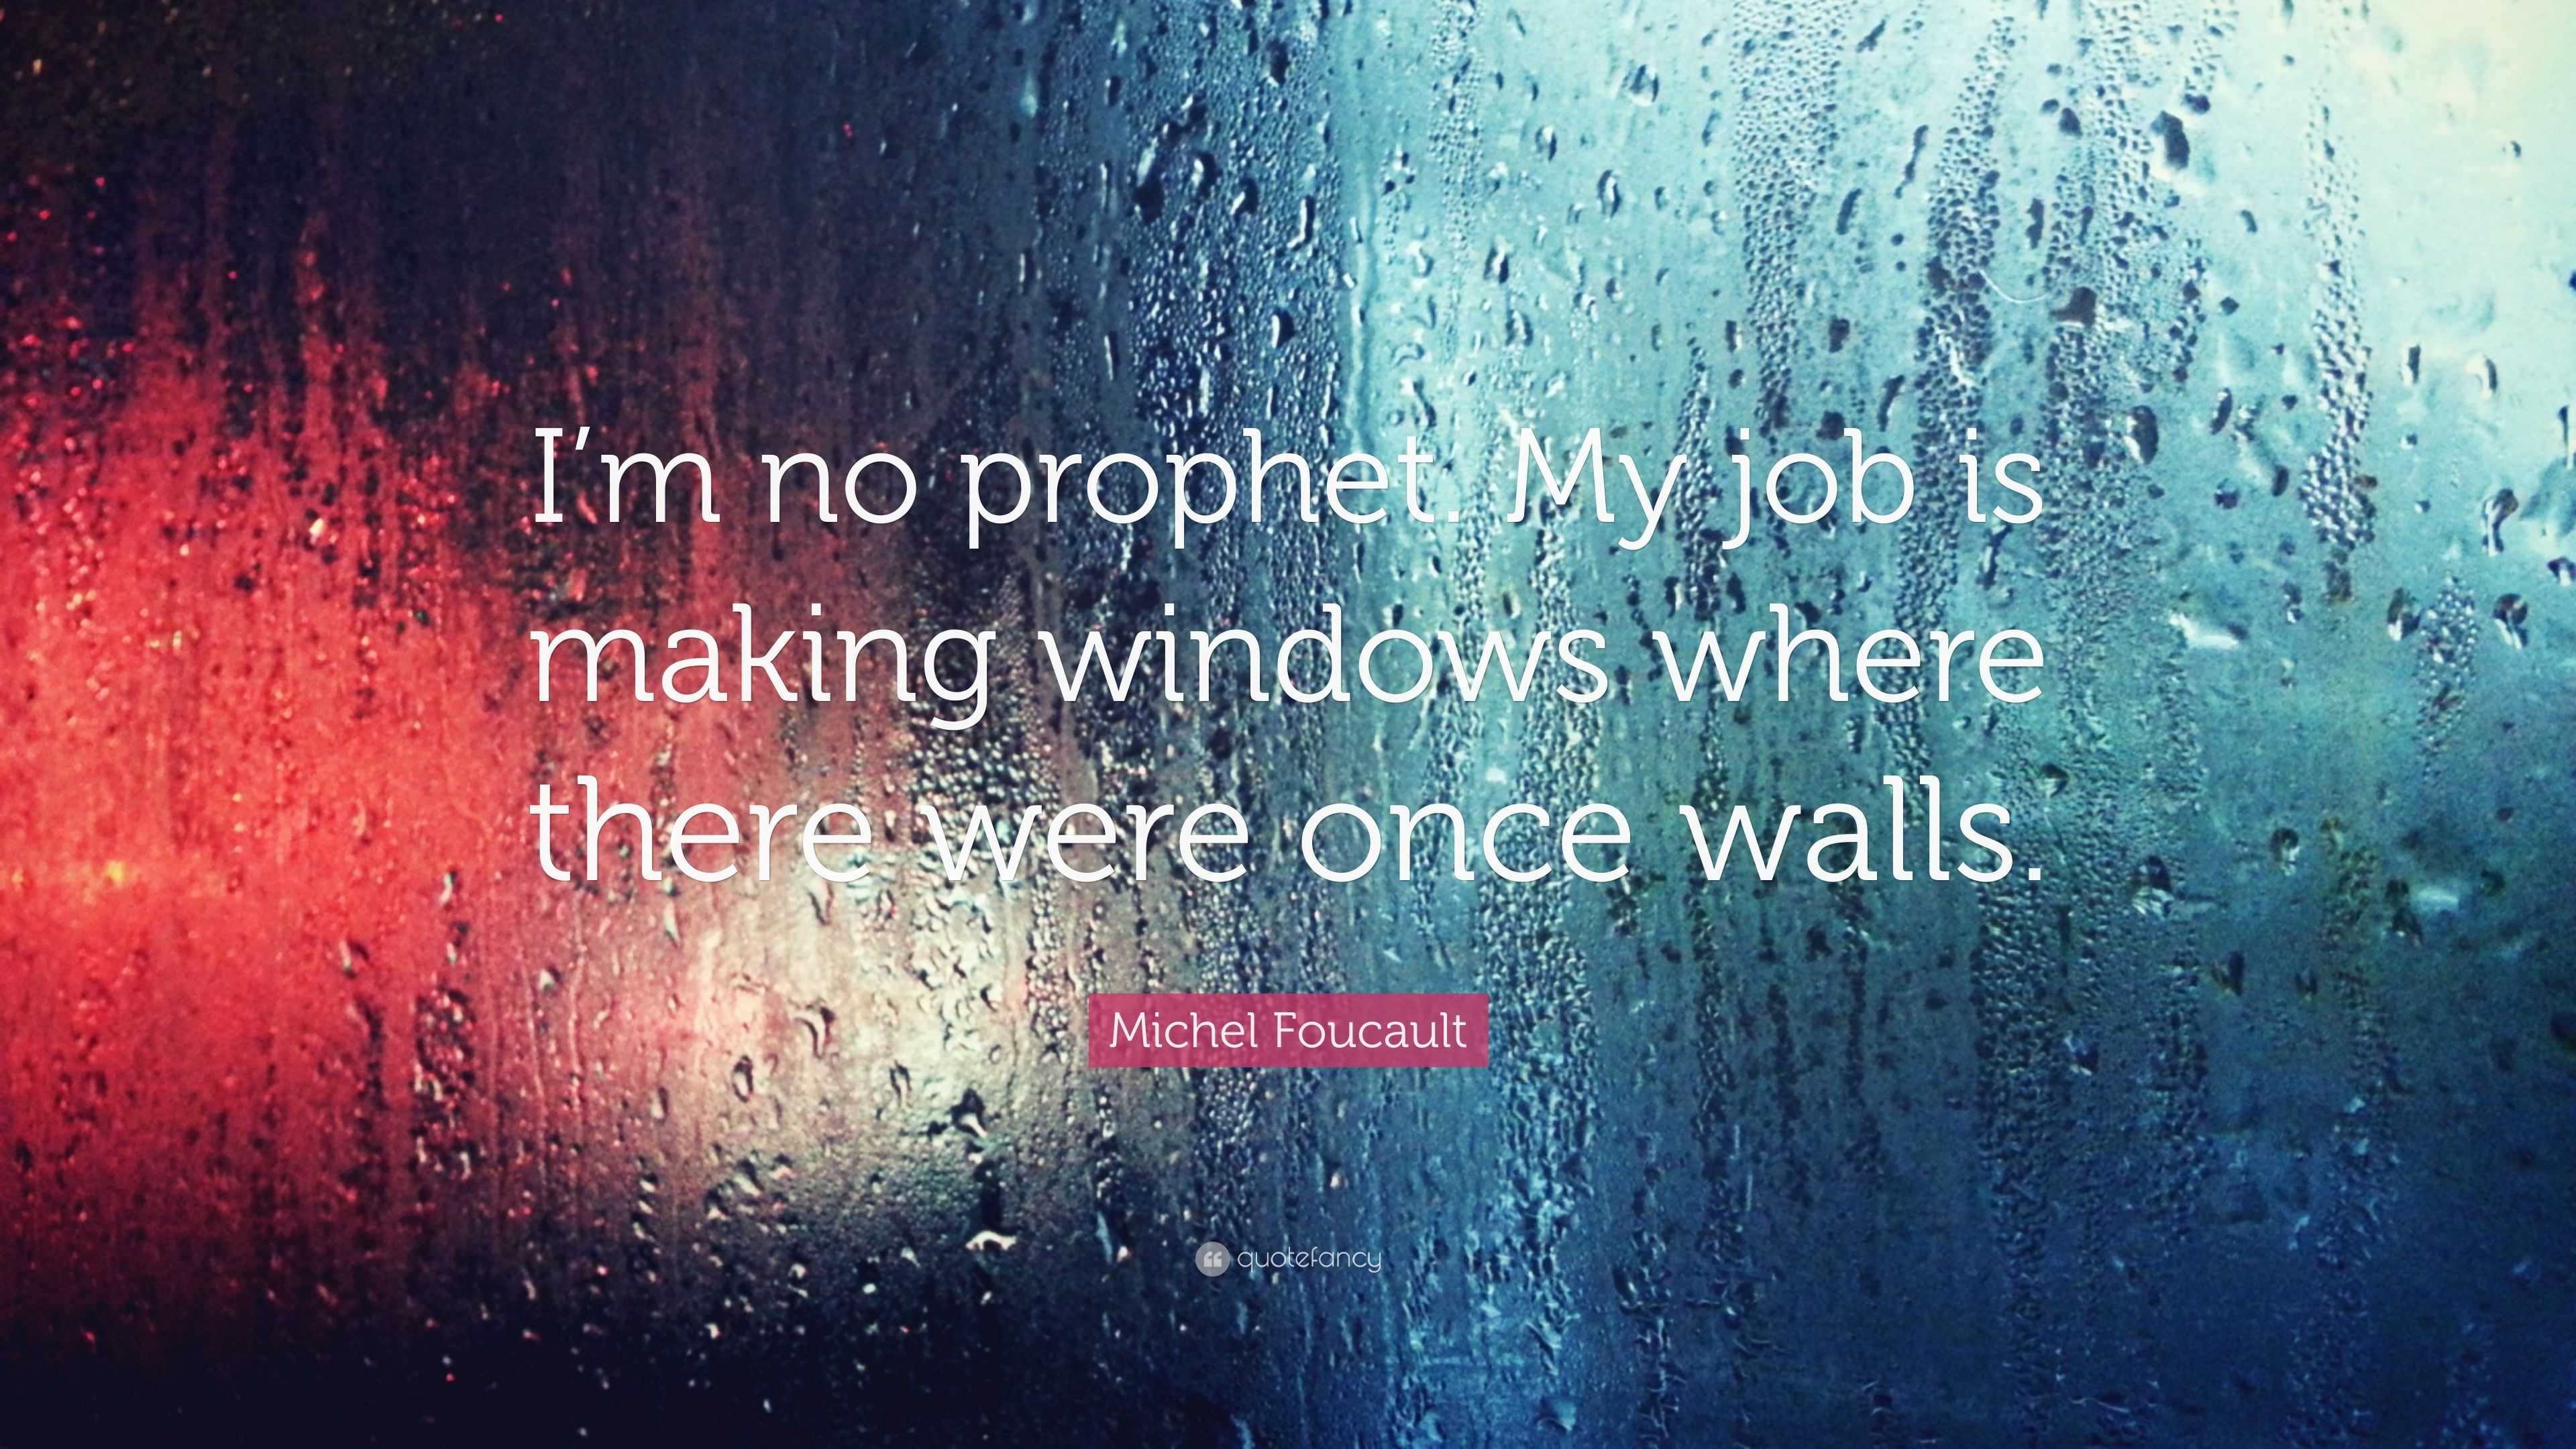 Michel Foucault Quote: “I’m no prophet. My job is making windows where